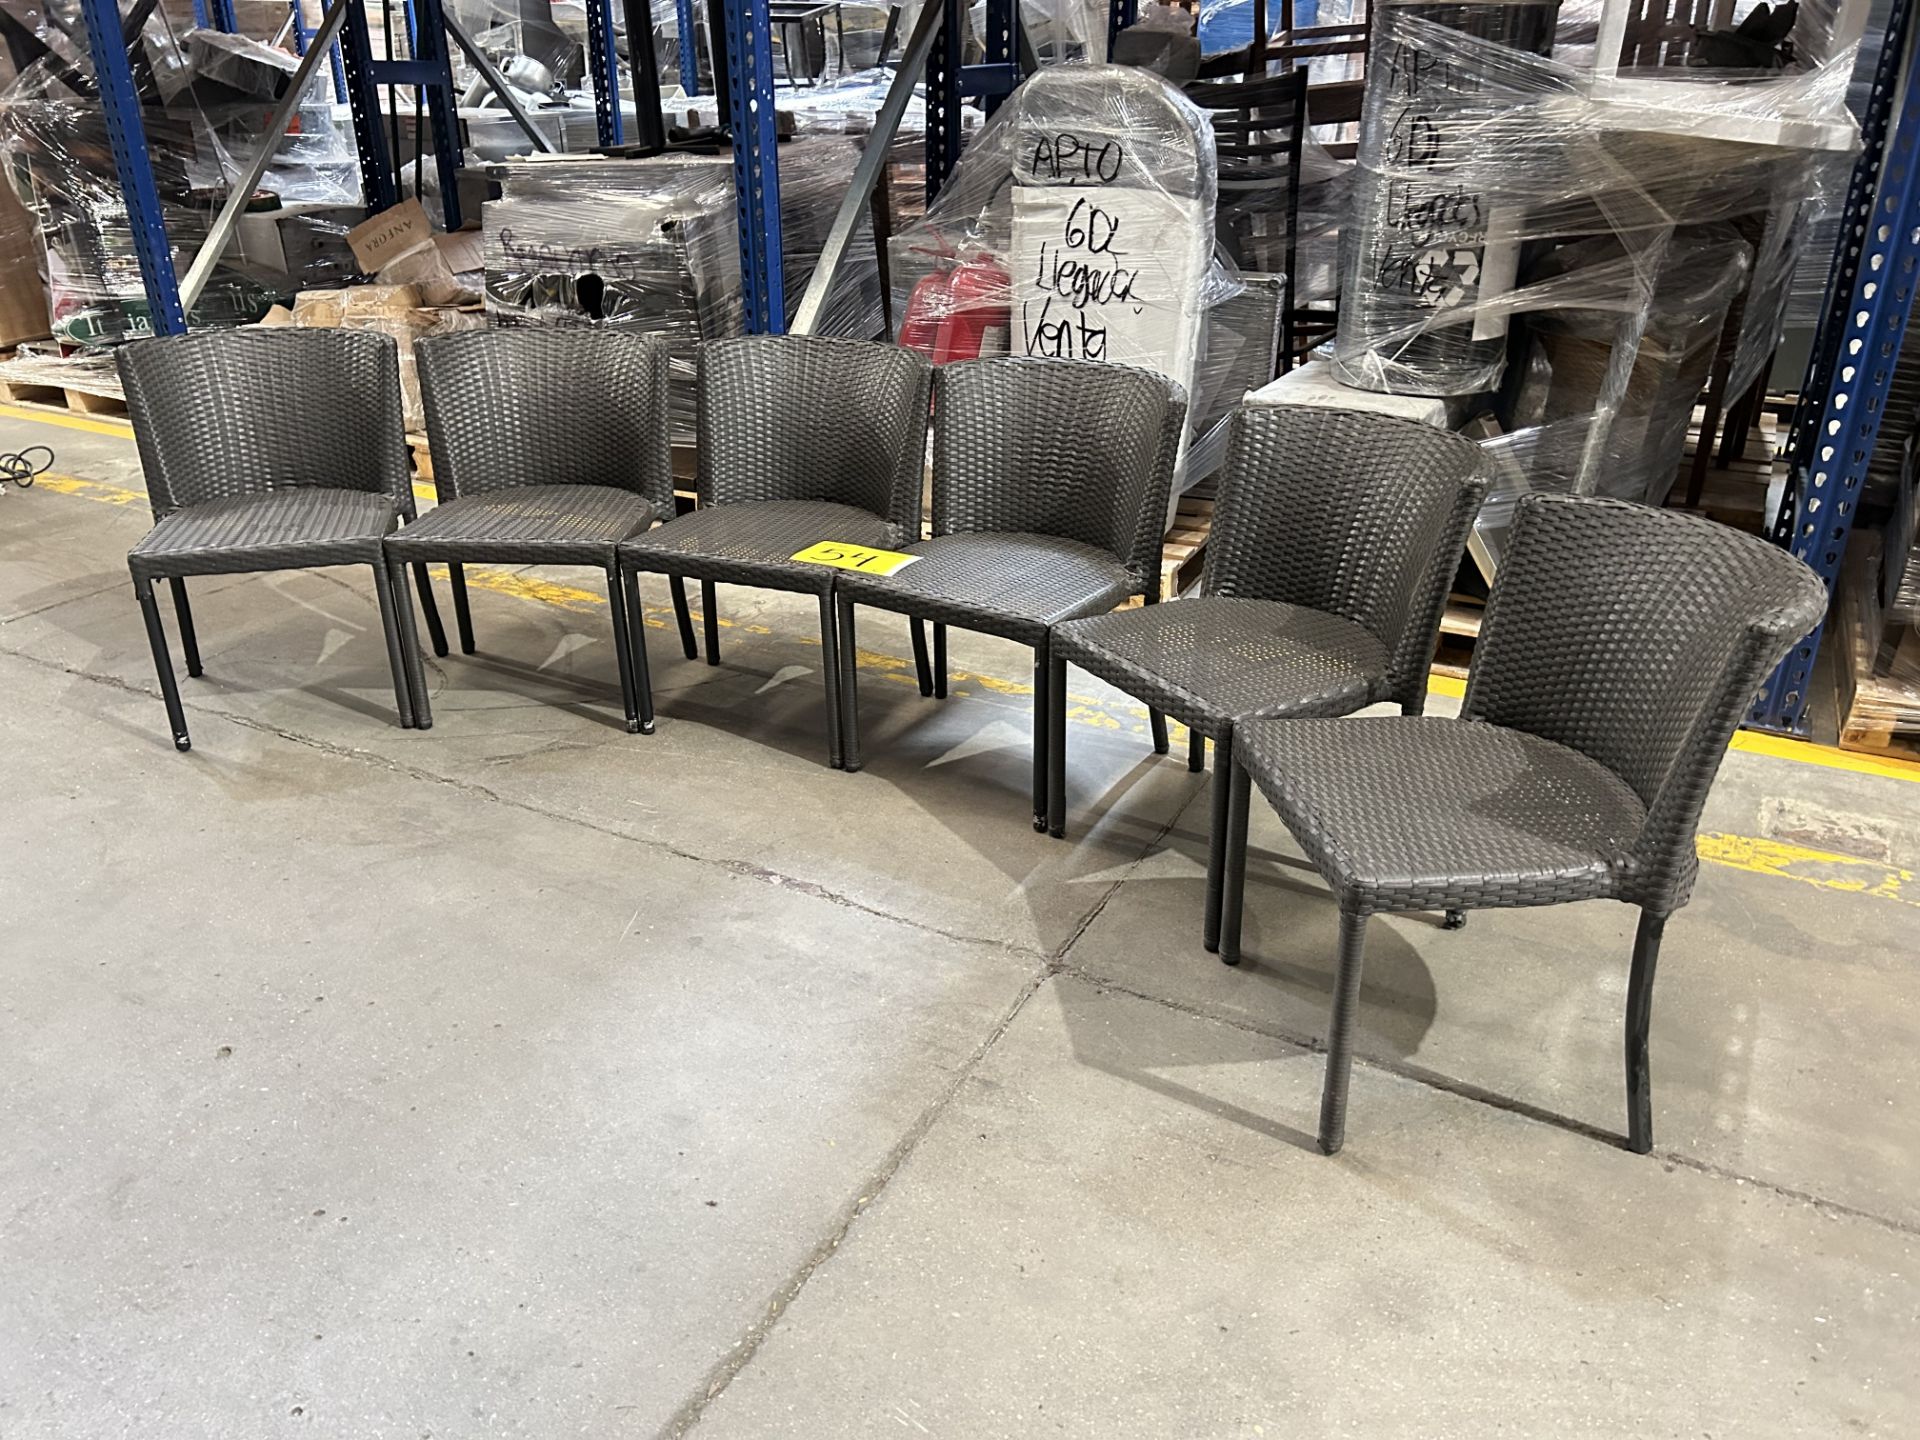 6 sillas de ratán respaldo curvo para exterior Color Café Medidas 55 cm x 62 cm x 74 cm (Equipo Usa - Image 4 of 10